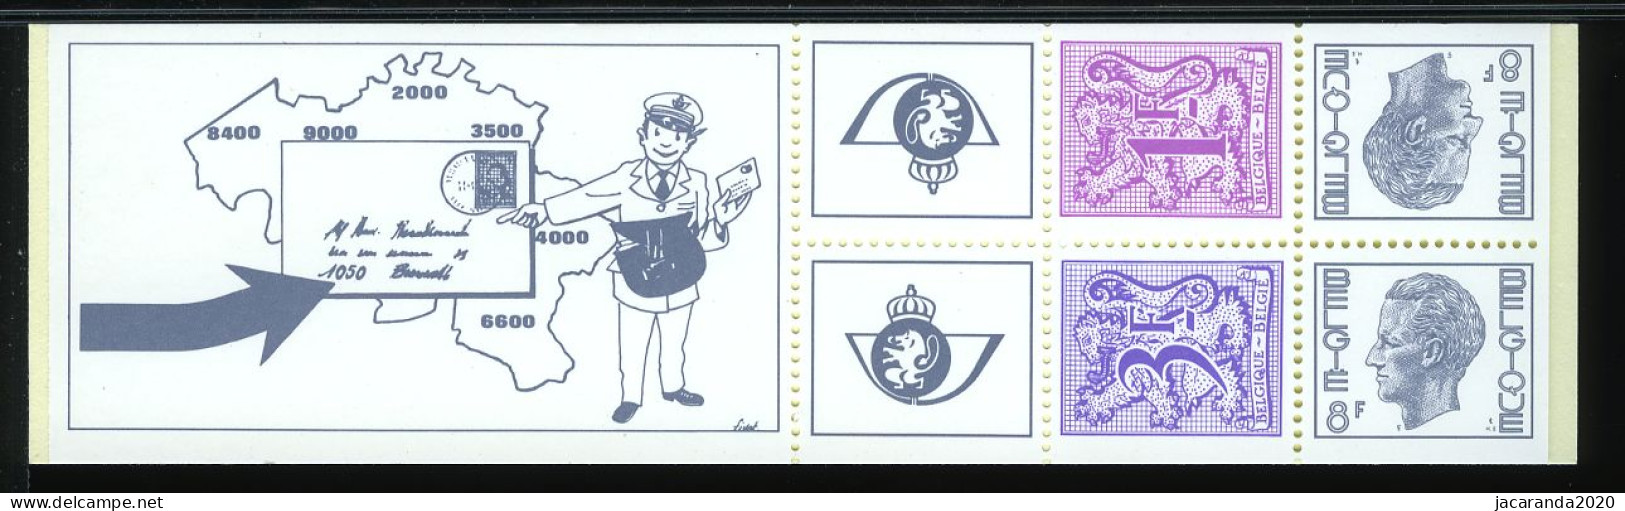 België B15 - Koning Boudewijn - Cijfer Op Heraldieke Leeuw - Roi Baudouin - Chiffre Sur Lion Héraldique - 1978 - 1953-2006 Moderni [B]